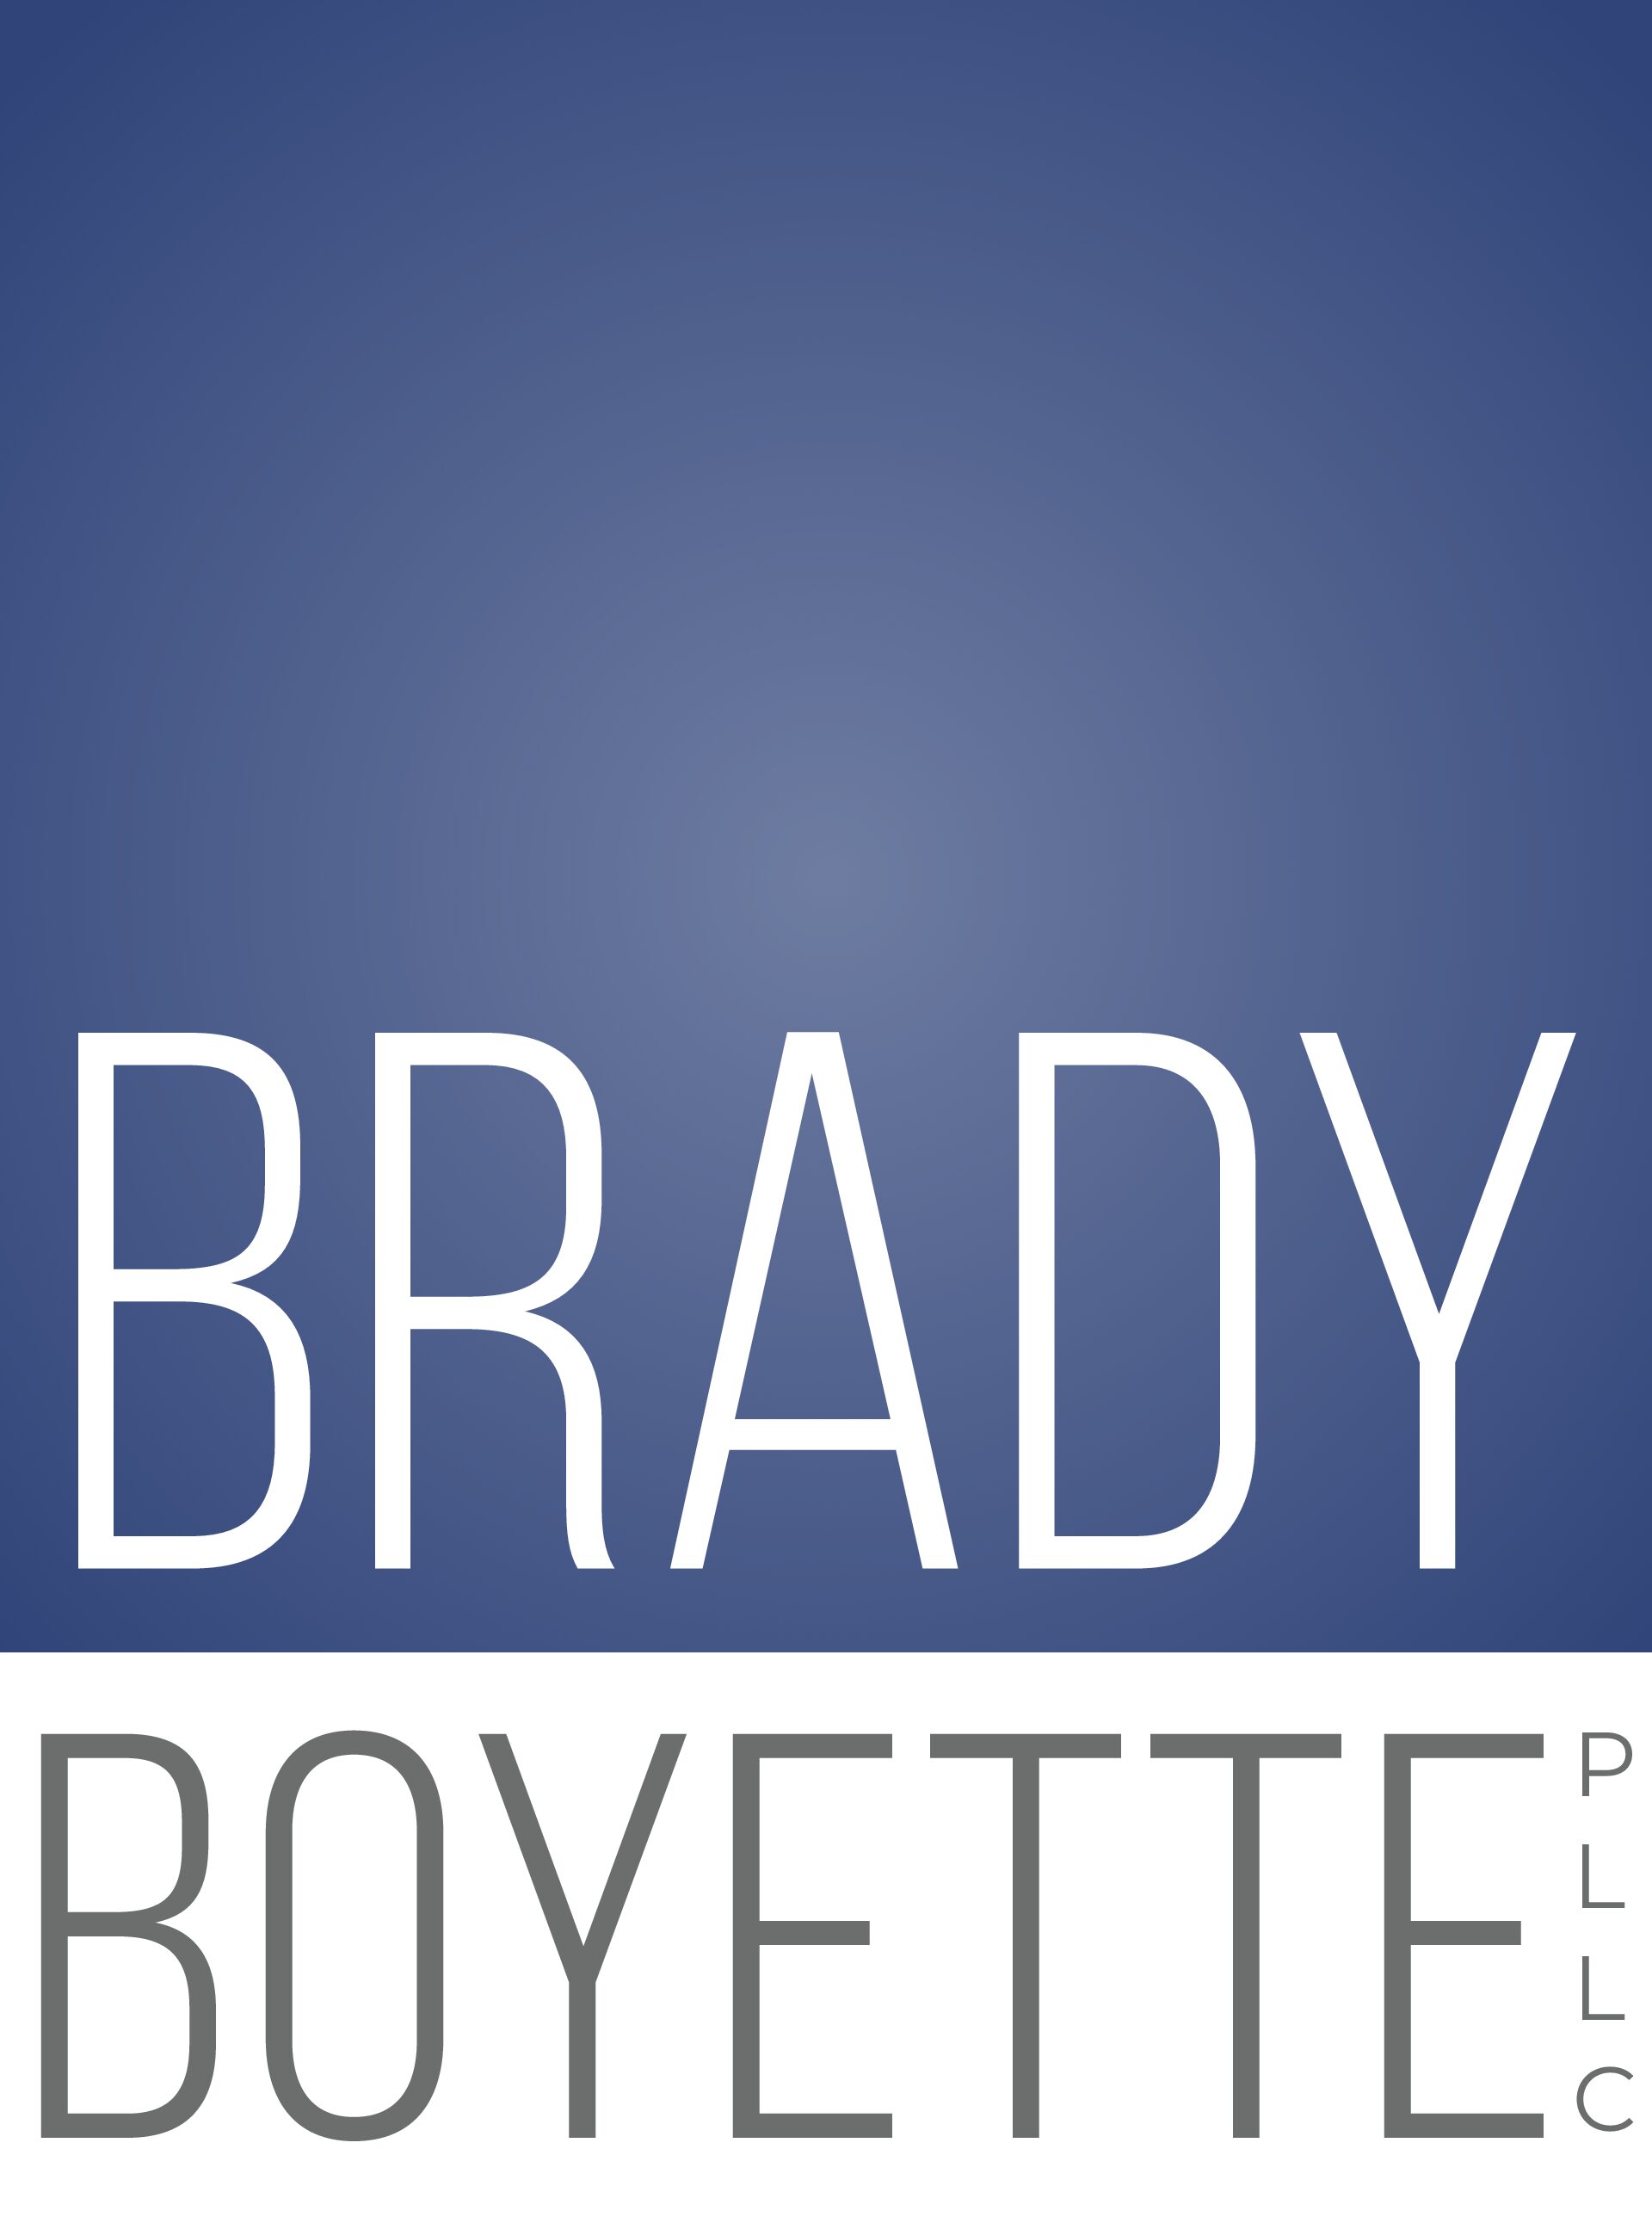 Brady Boyette 